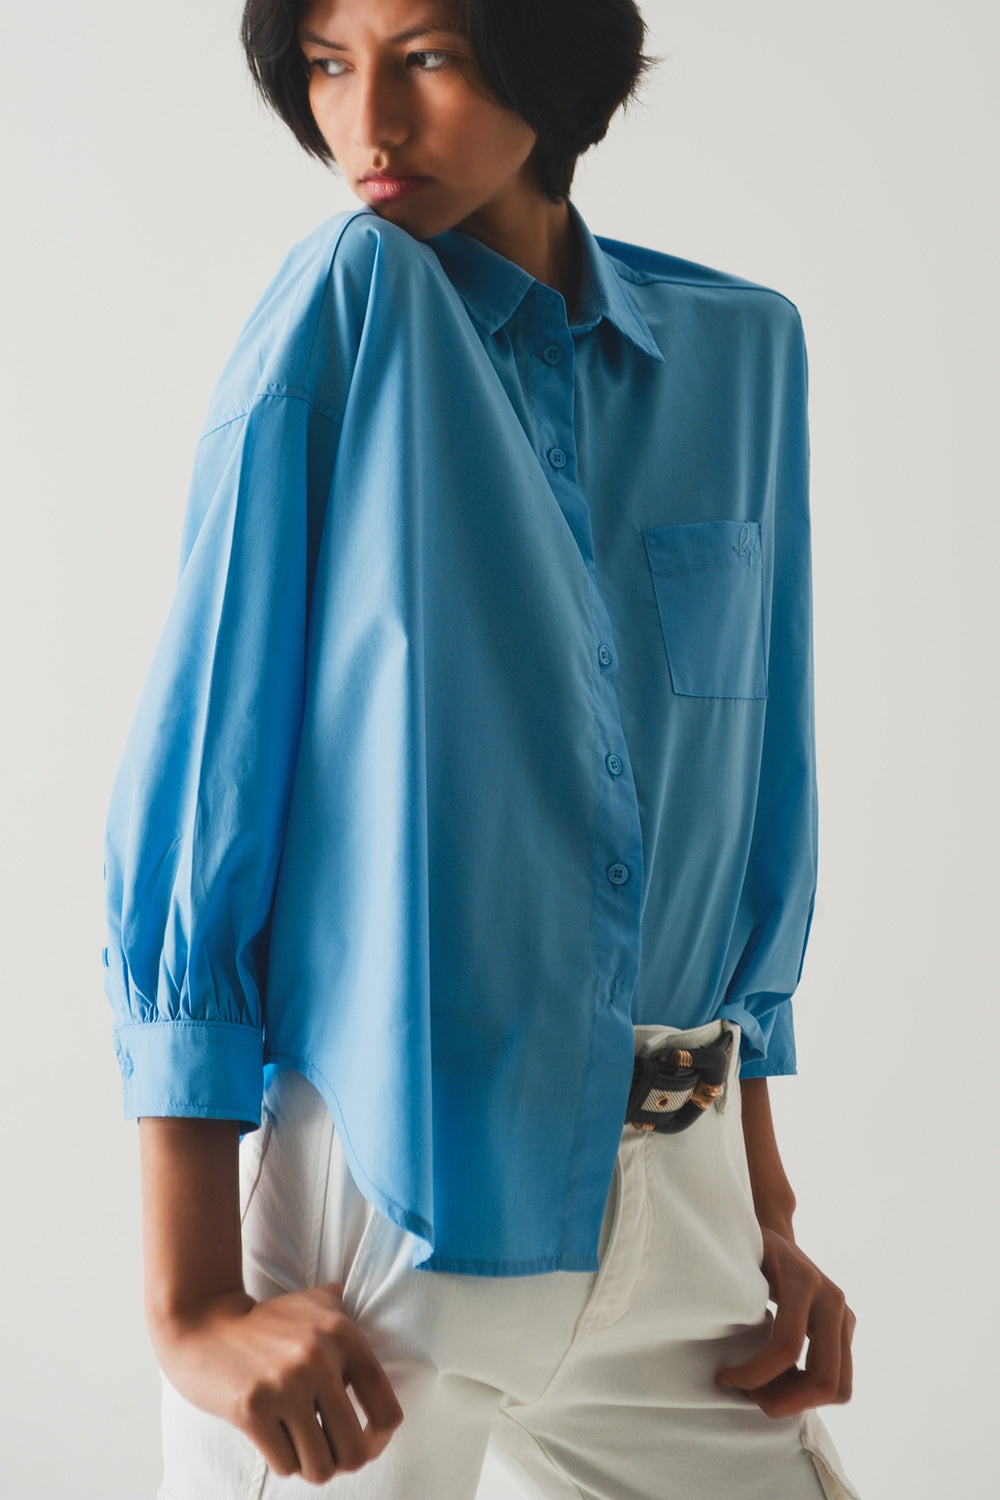 Q2 volume sleeve poplin shirt in blue